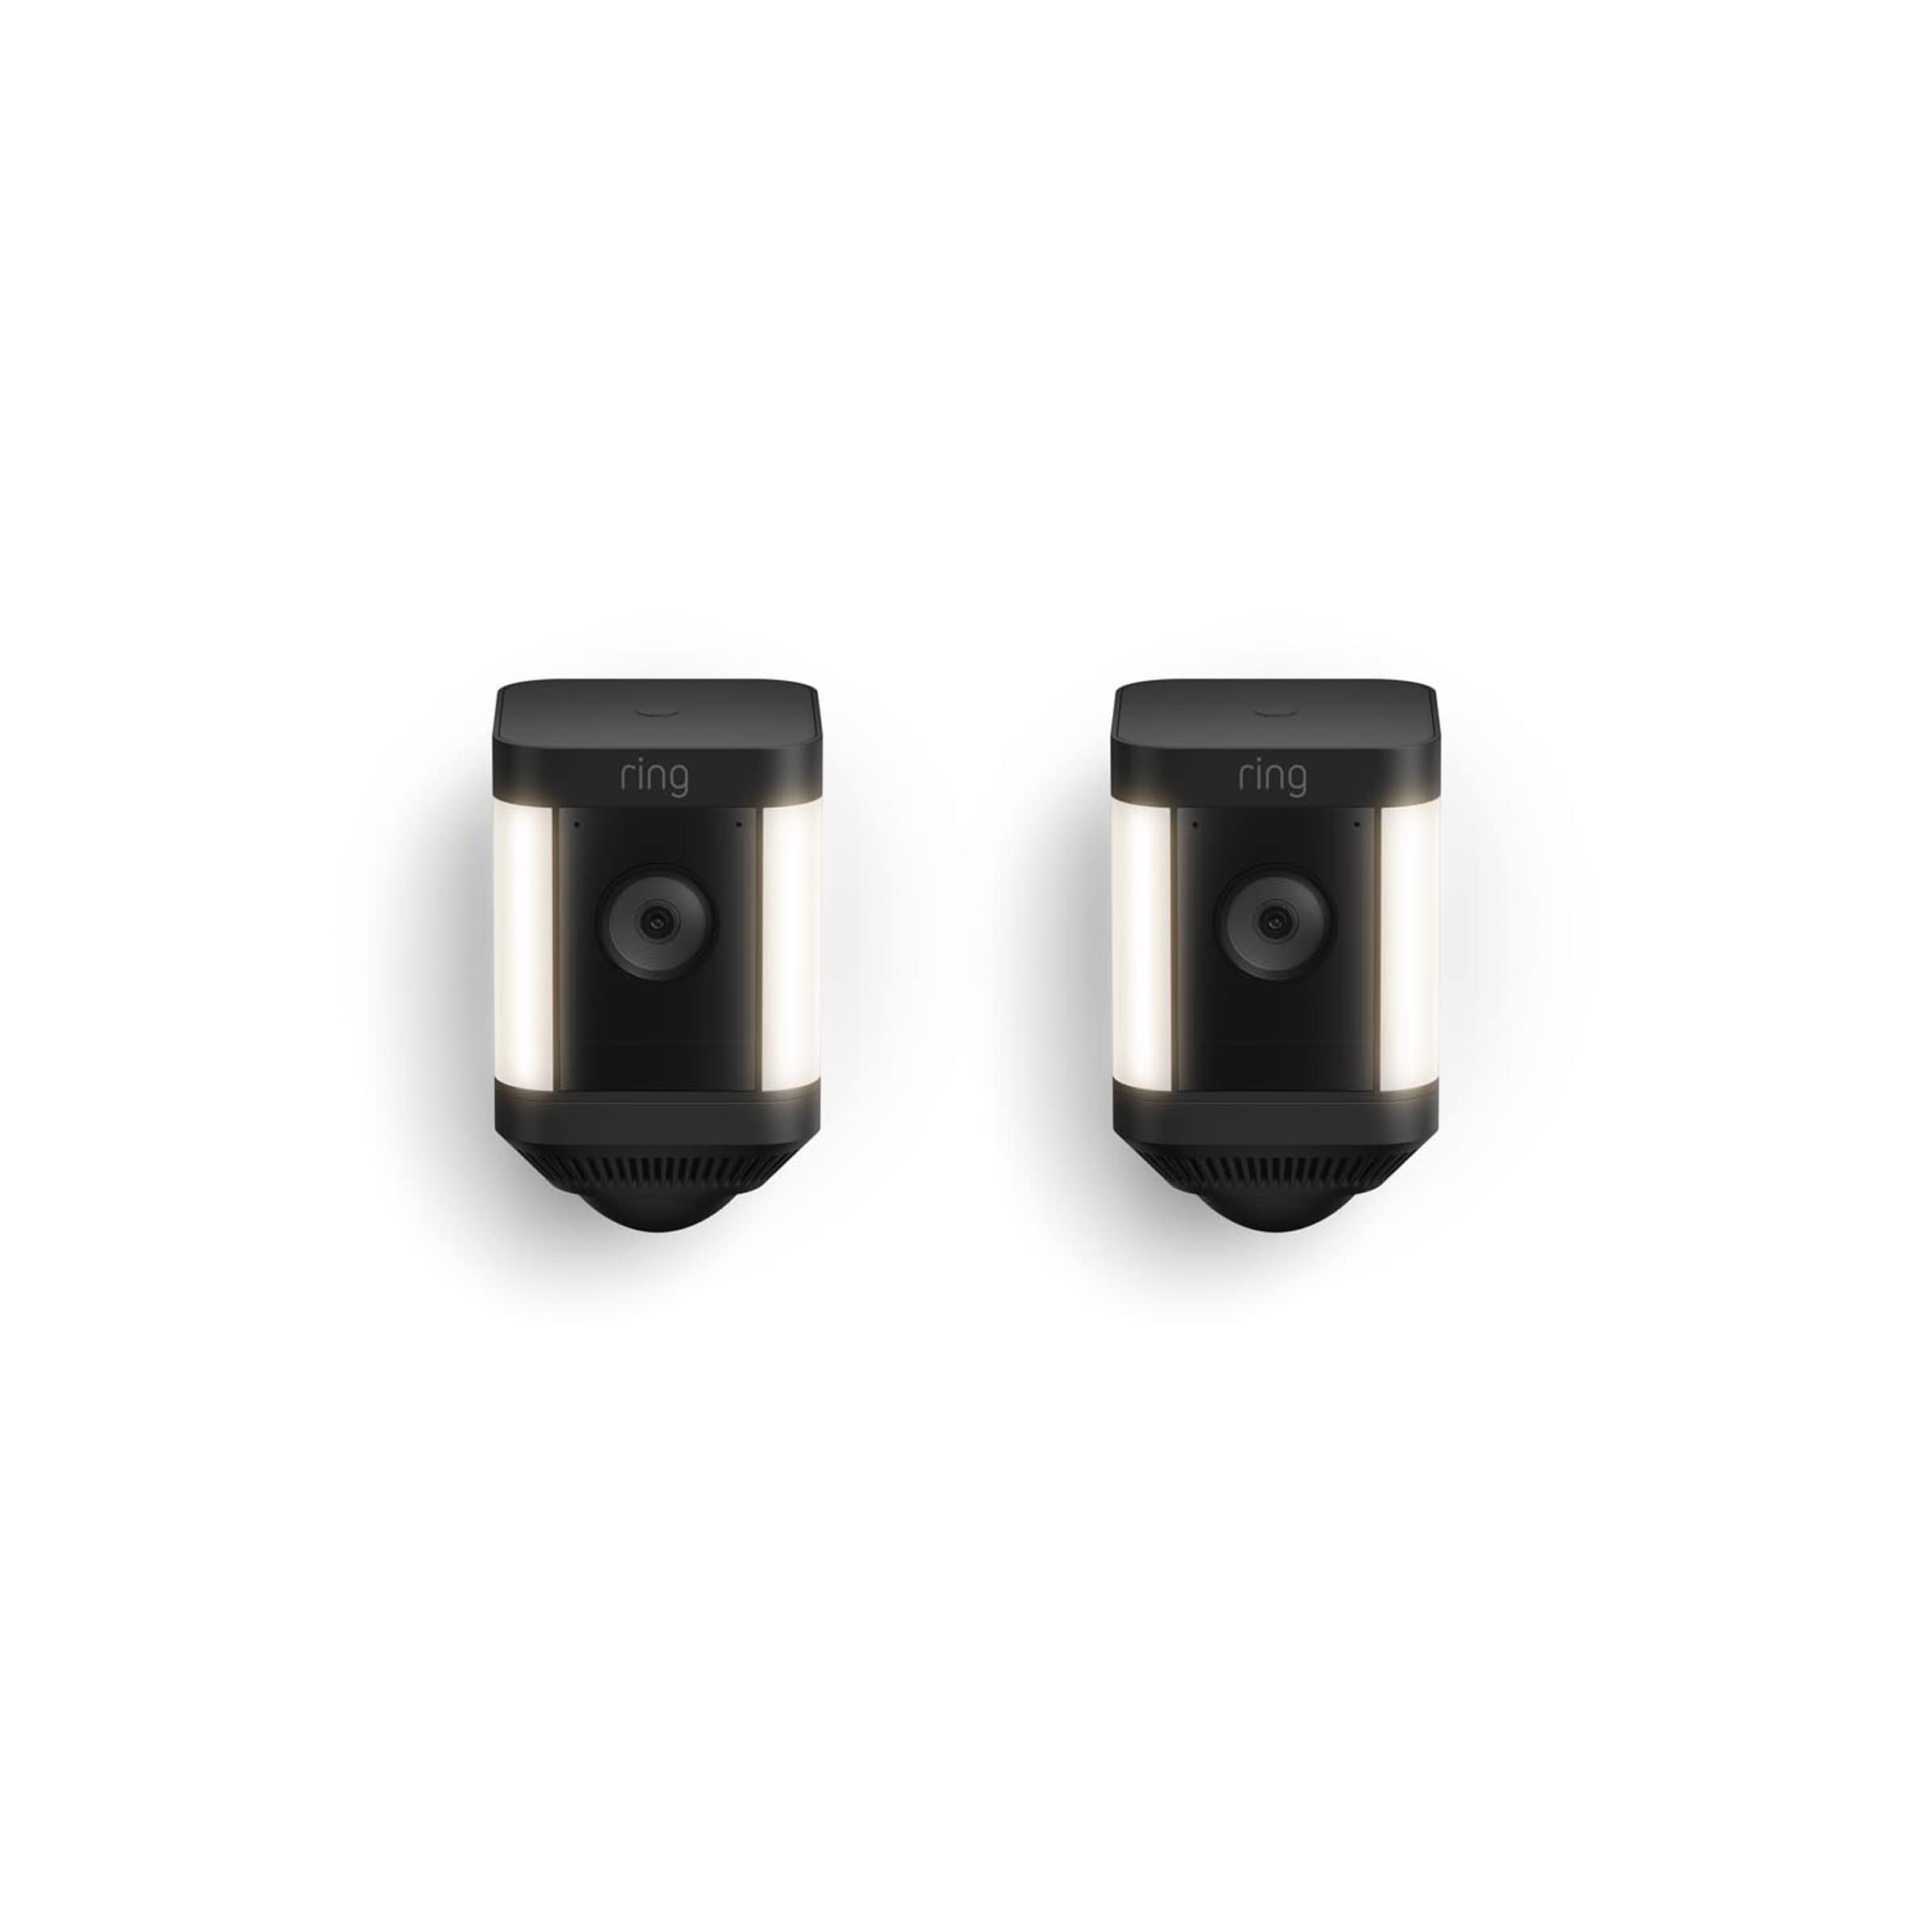 Ring Spotlight Cam Plus Black Battery-Powered Security Camera - B09K1HHZTM